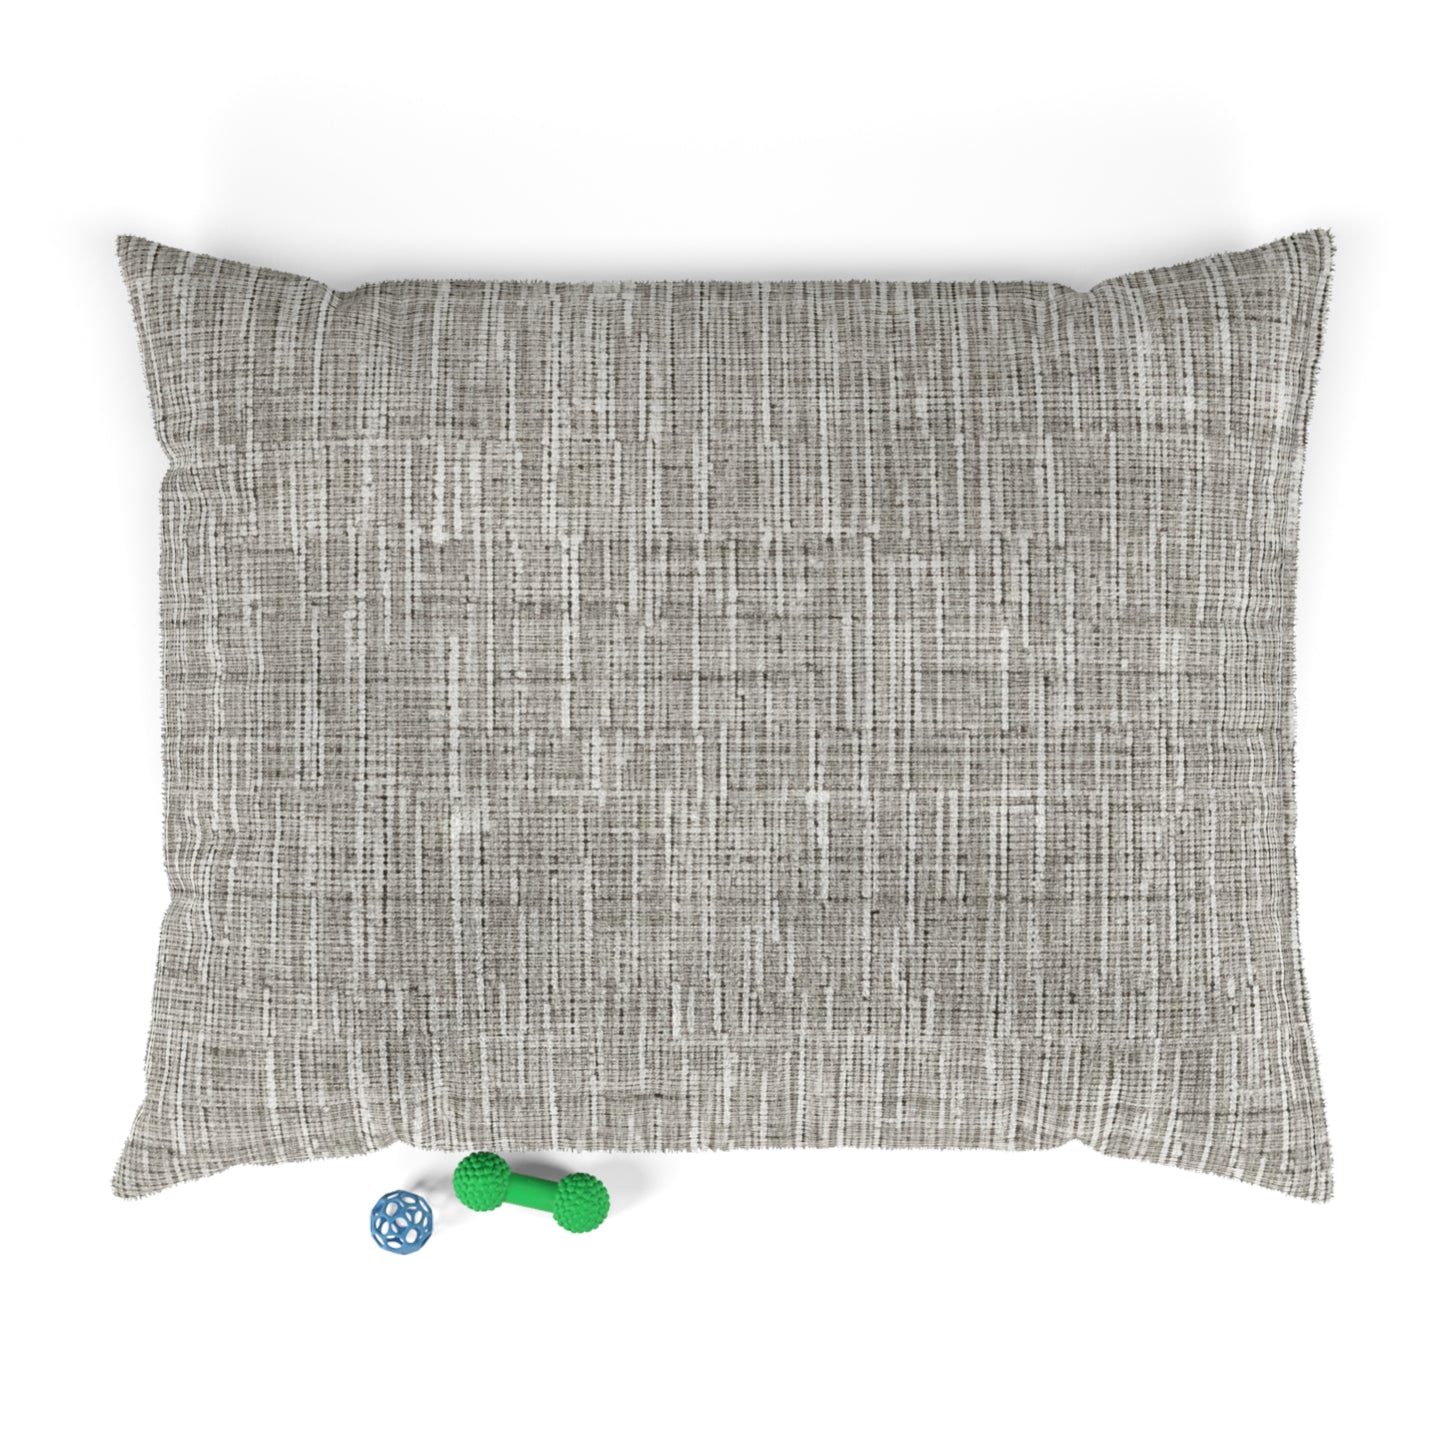 Silver Grey: Denim-Inspired, Contemporary Fabric Design - Dog & Pet Bed